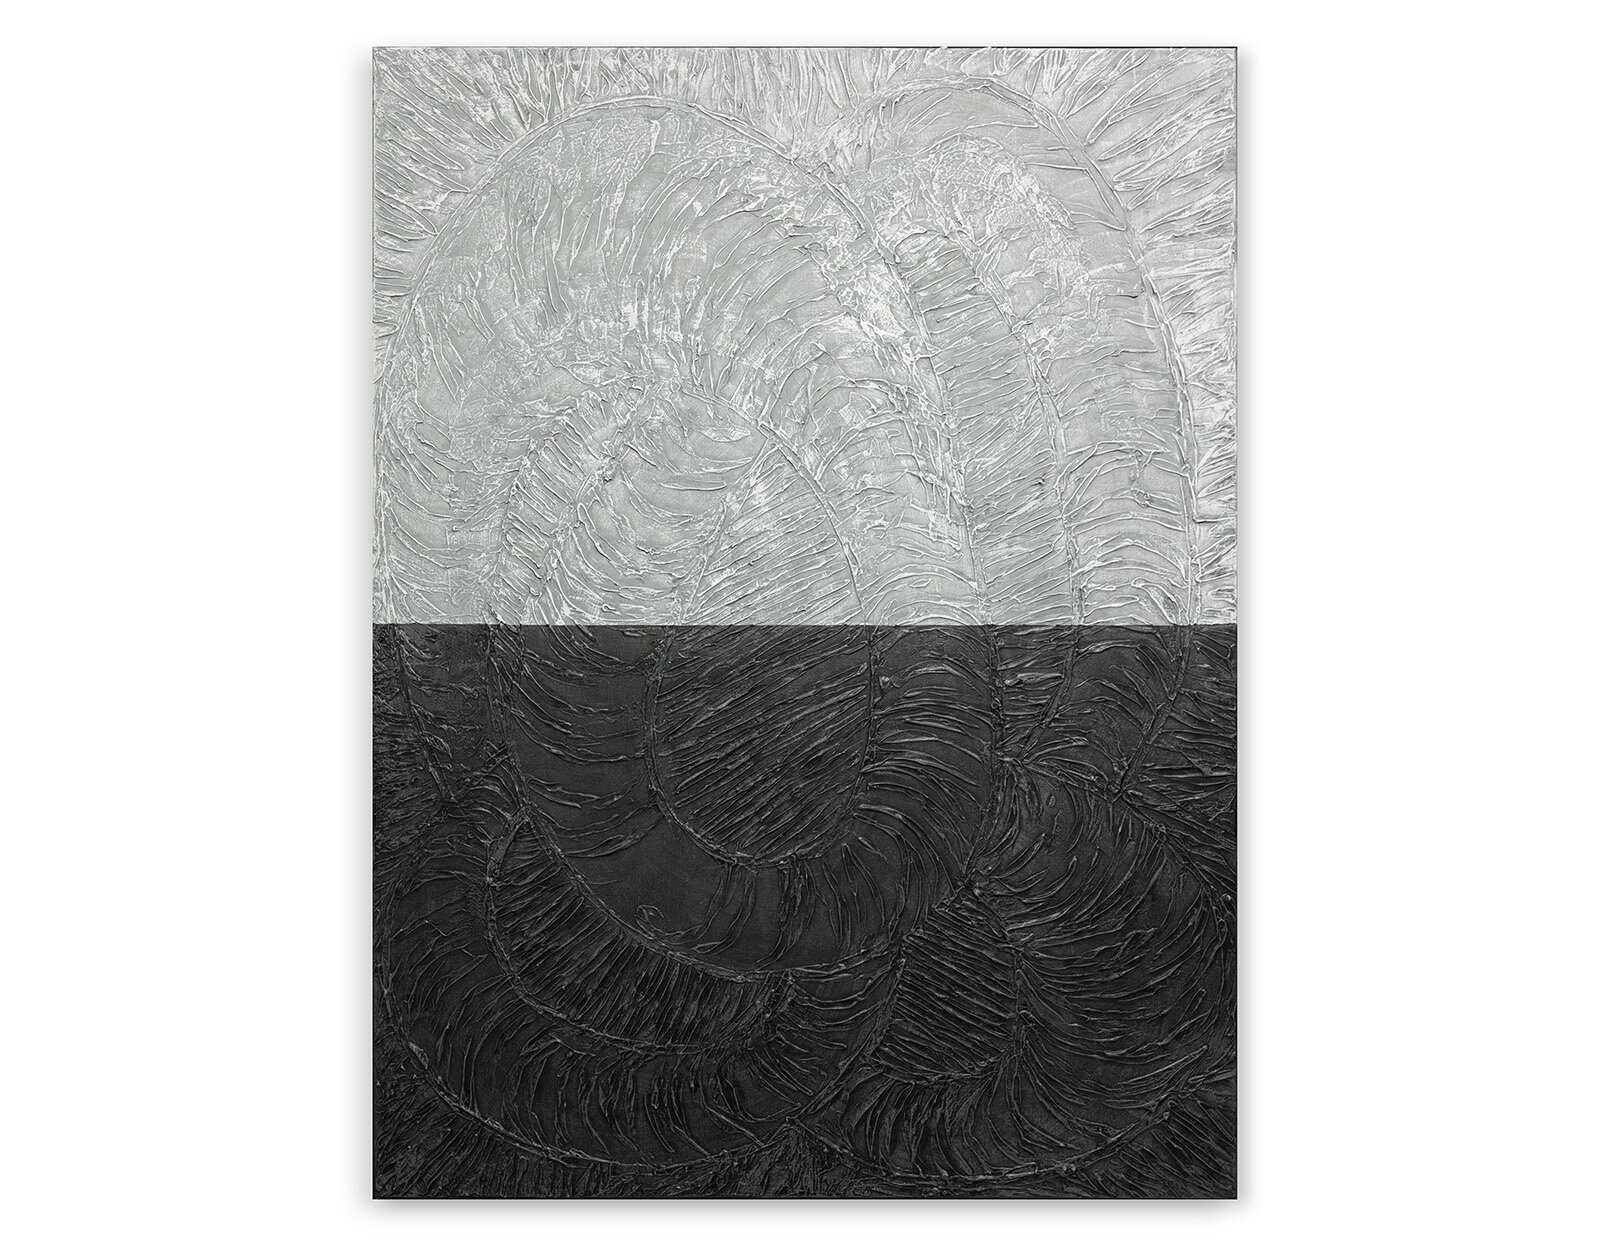  cosmic debris          (SOLD)  acrylic on canvas  48” x 36”  2018 